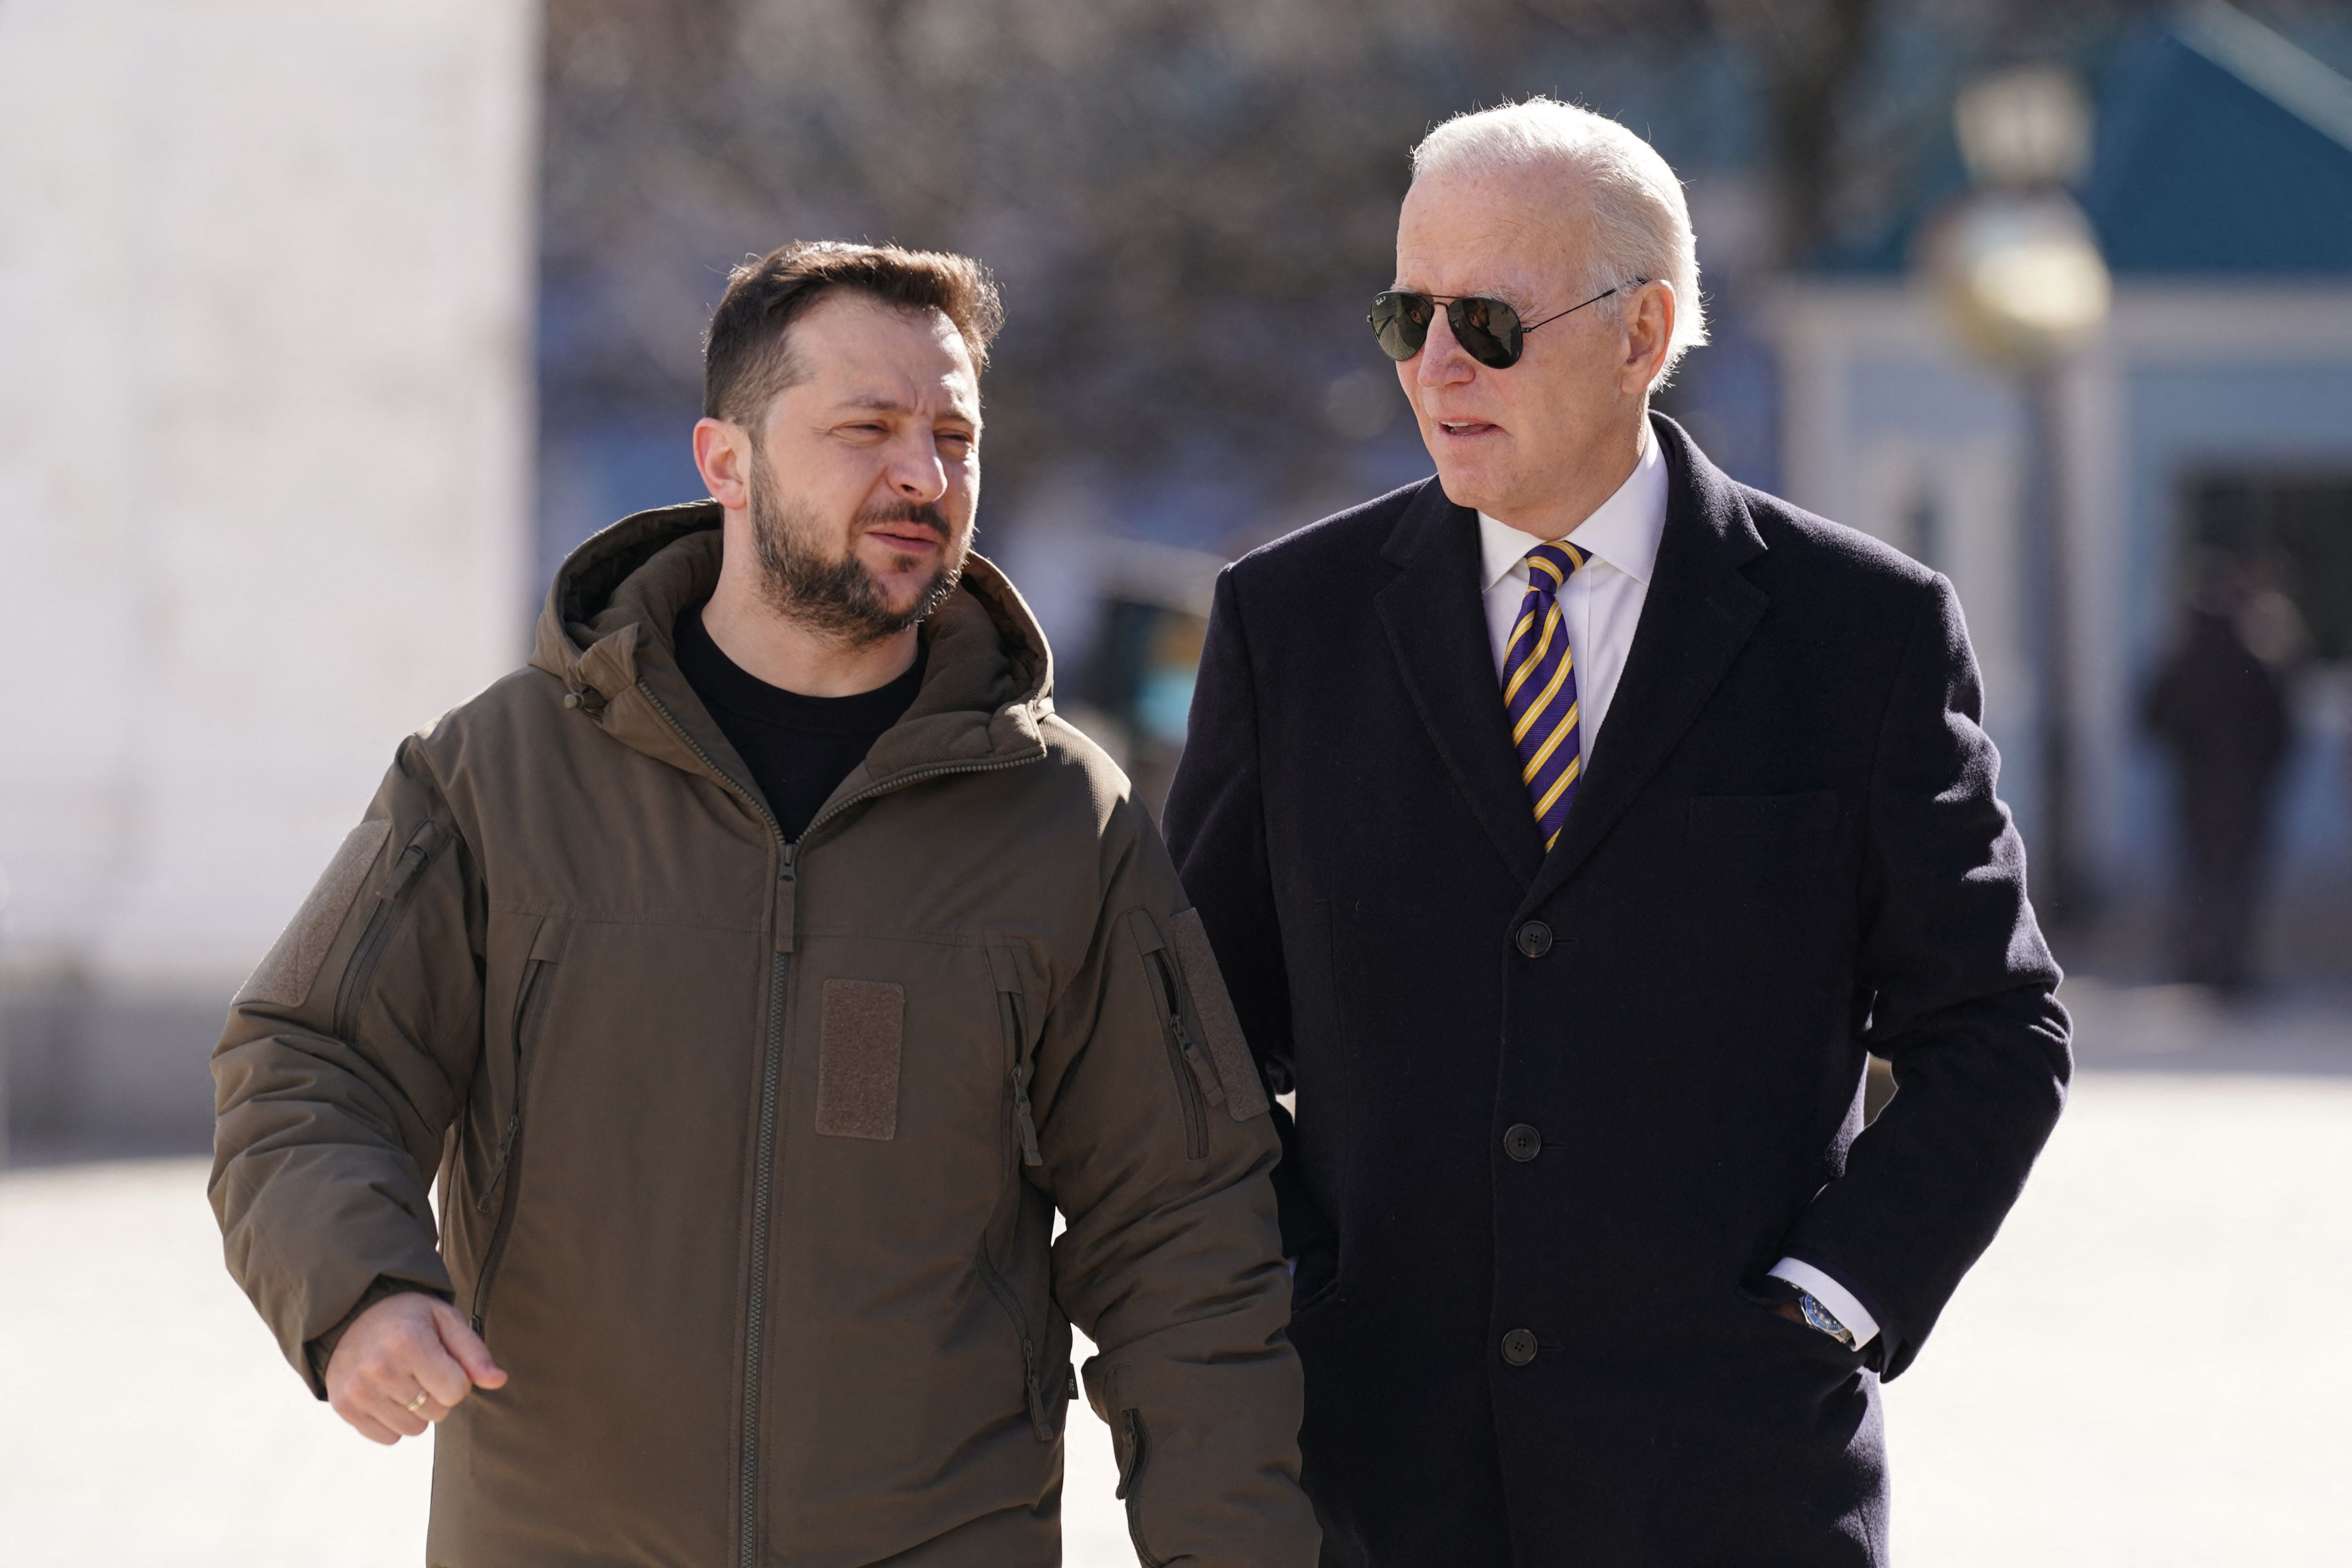 Joe Biden walks next to Ukrainian President Volodymyr Zelensky as he arrives for a visit in Kyiv